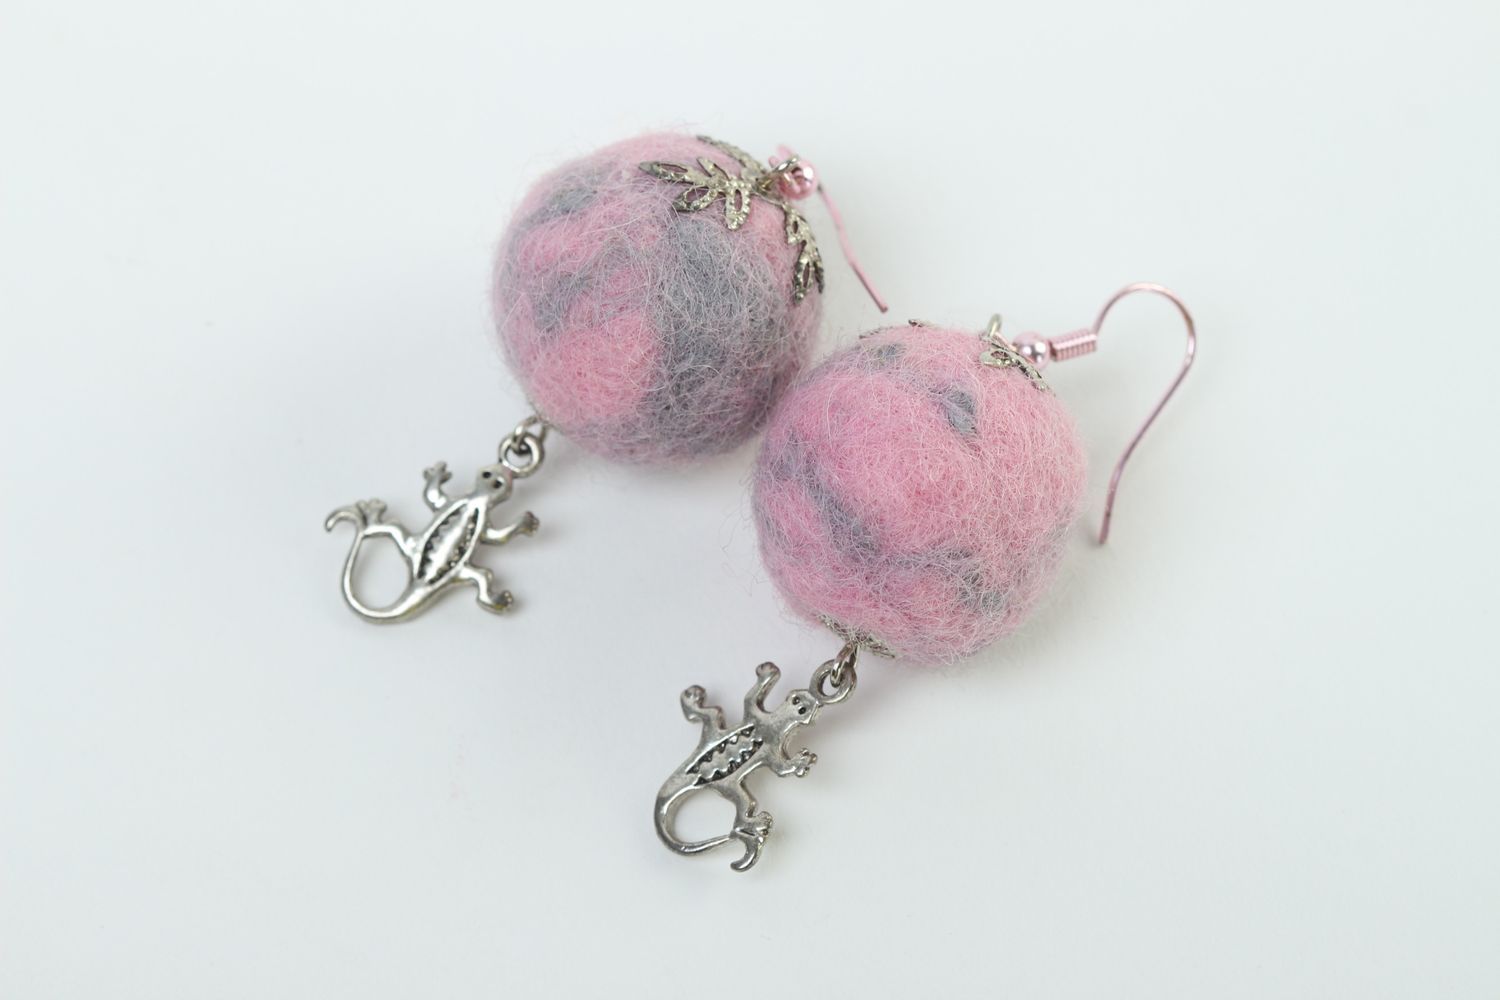 Unusual handmade wool earrings felted ball earrings cool jewelry designs photo 3